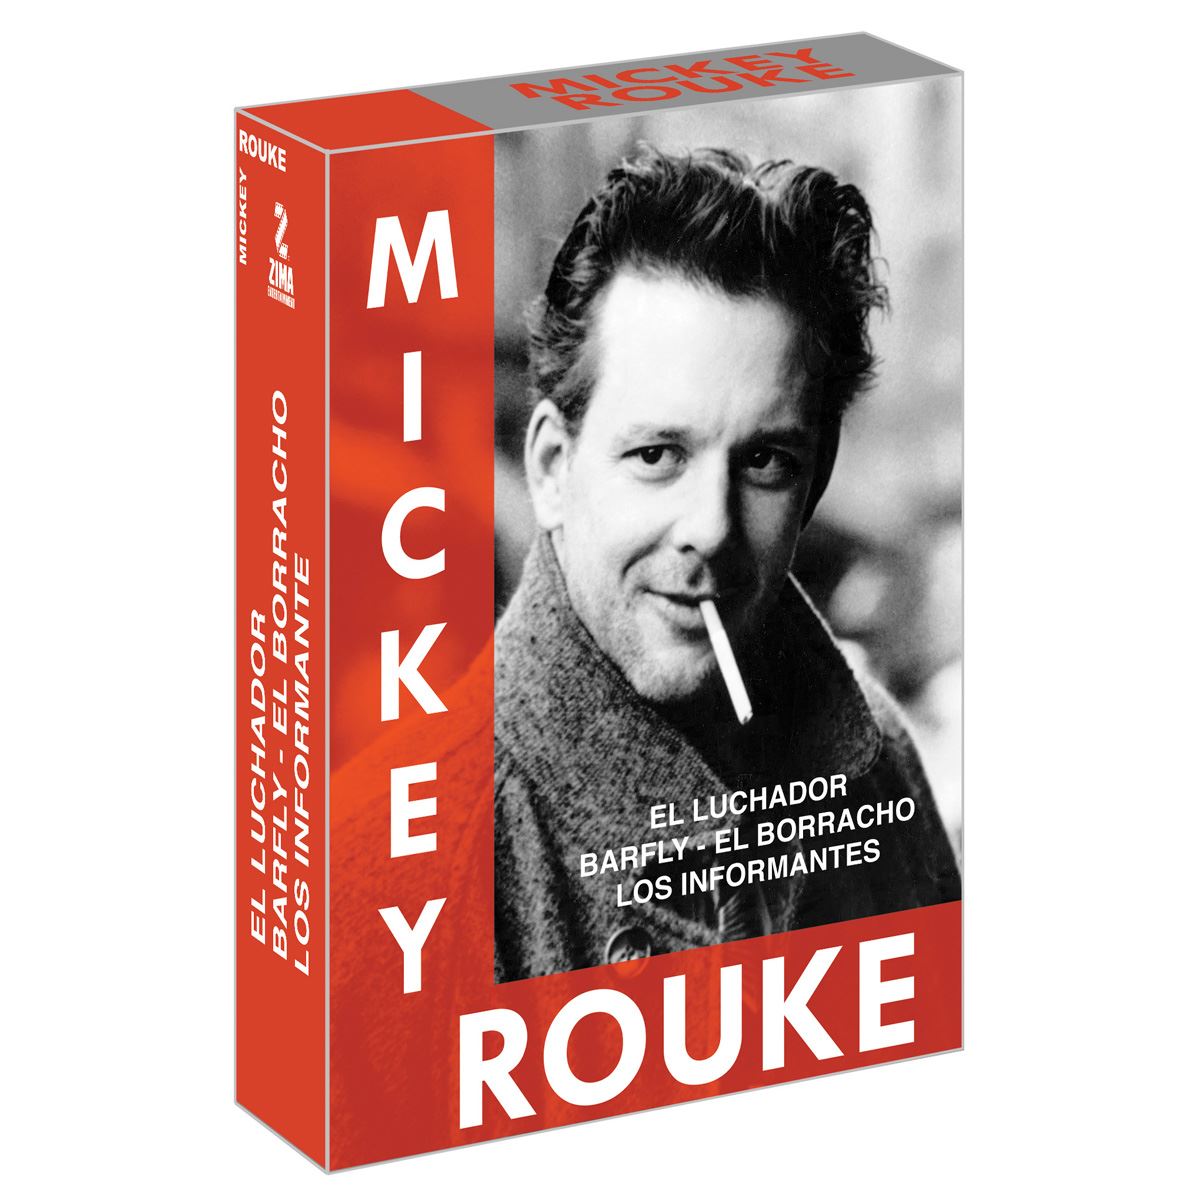 DVD Paquete Mickey Rouke